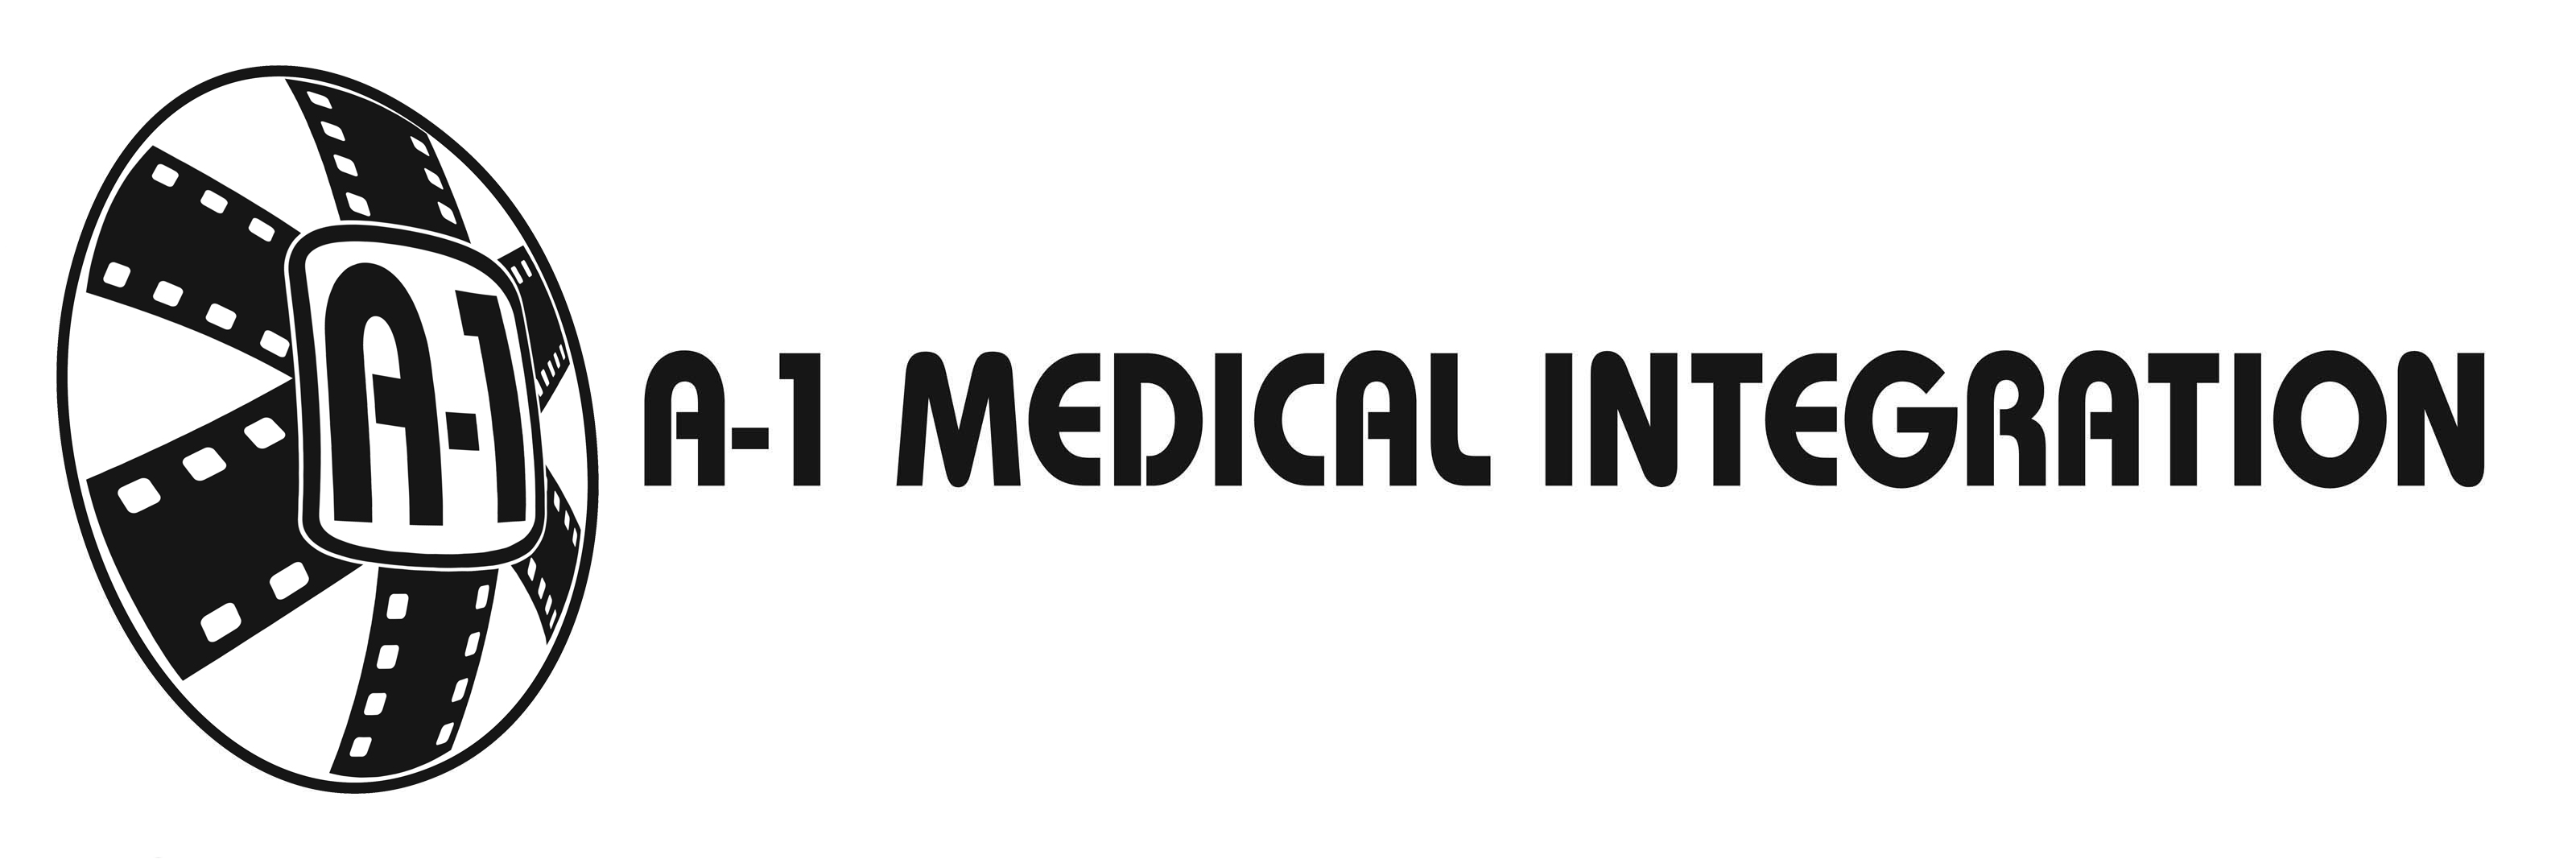 A-1 Medical Integration